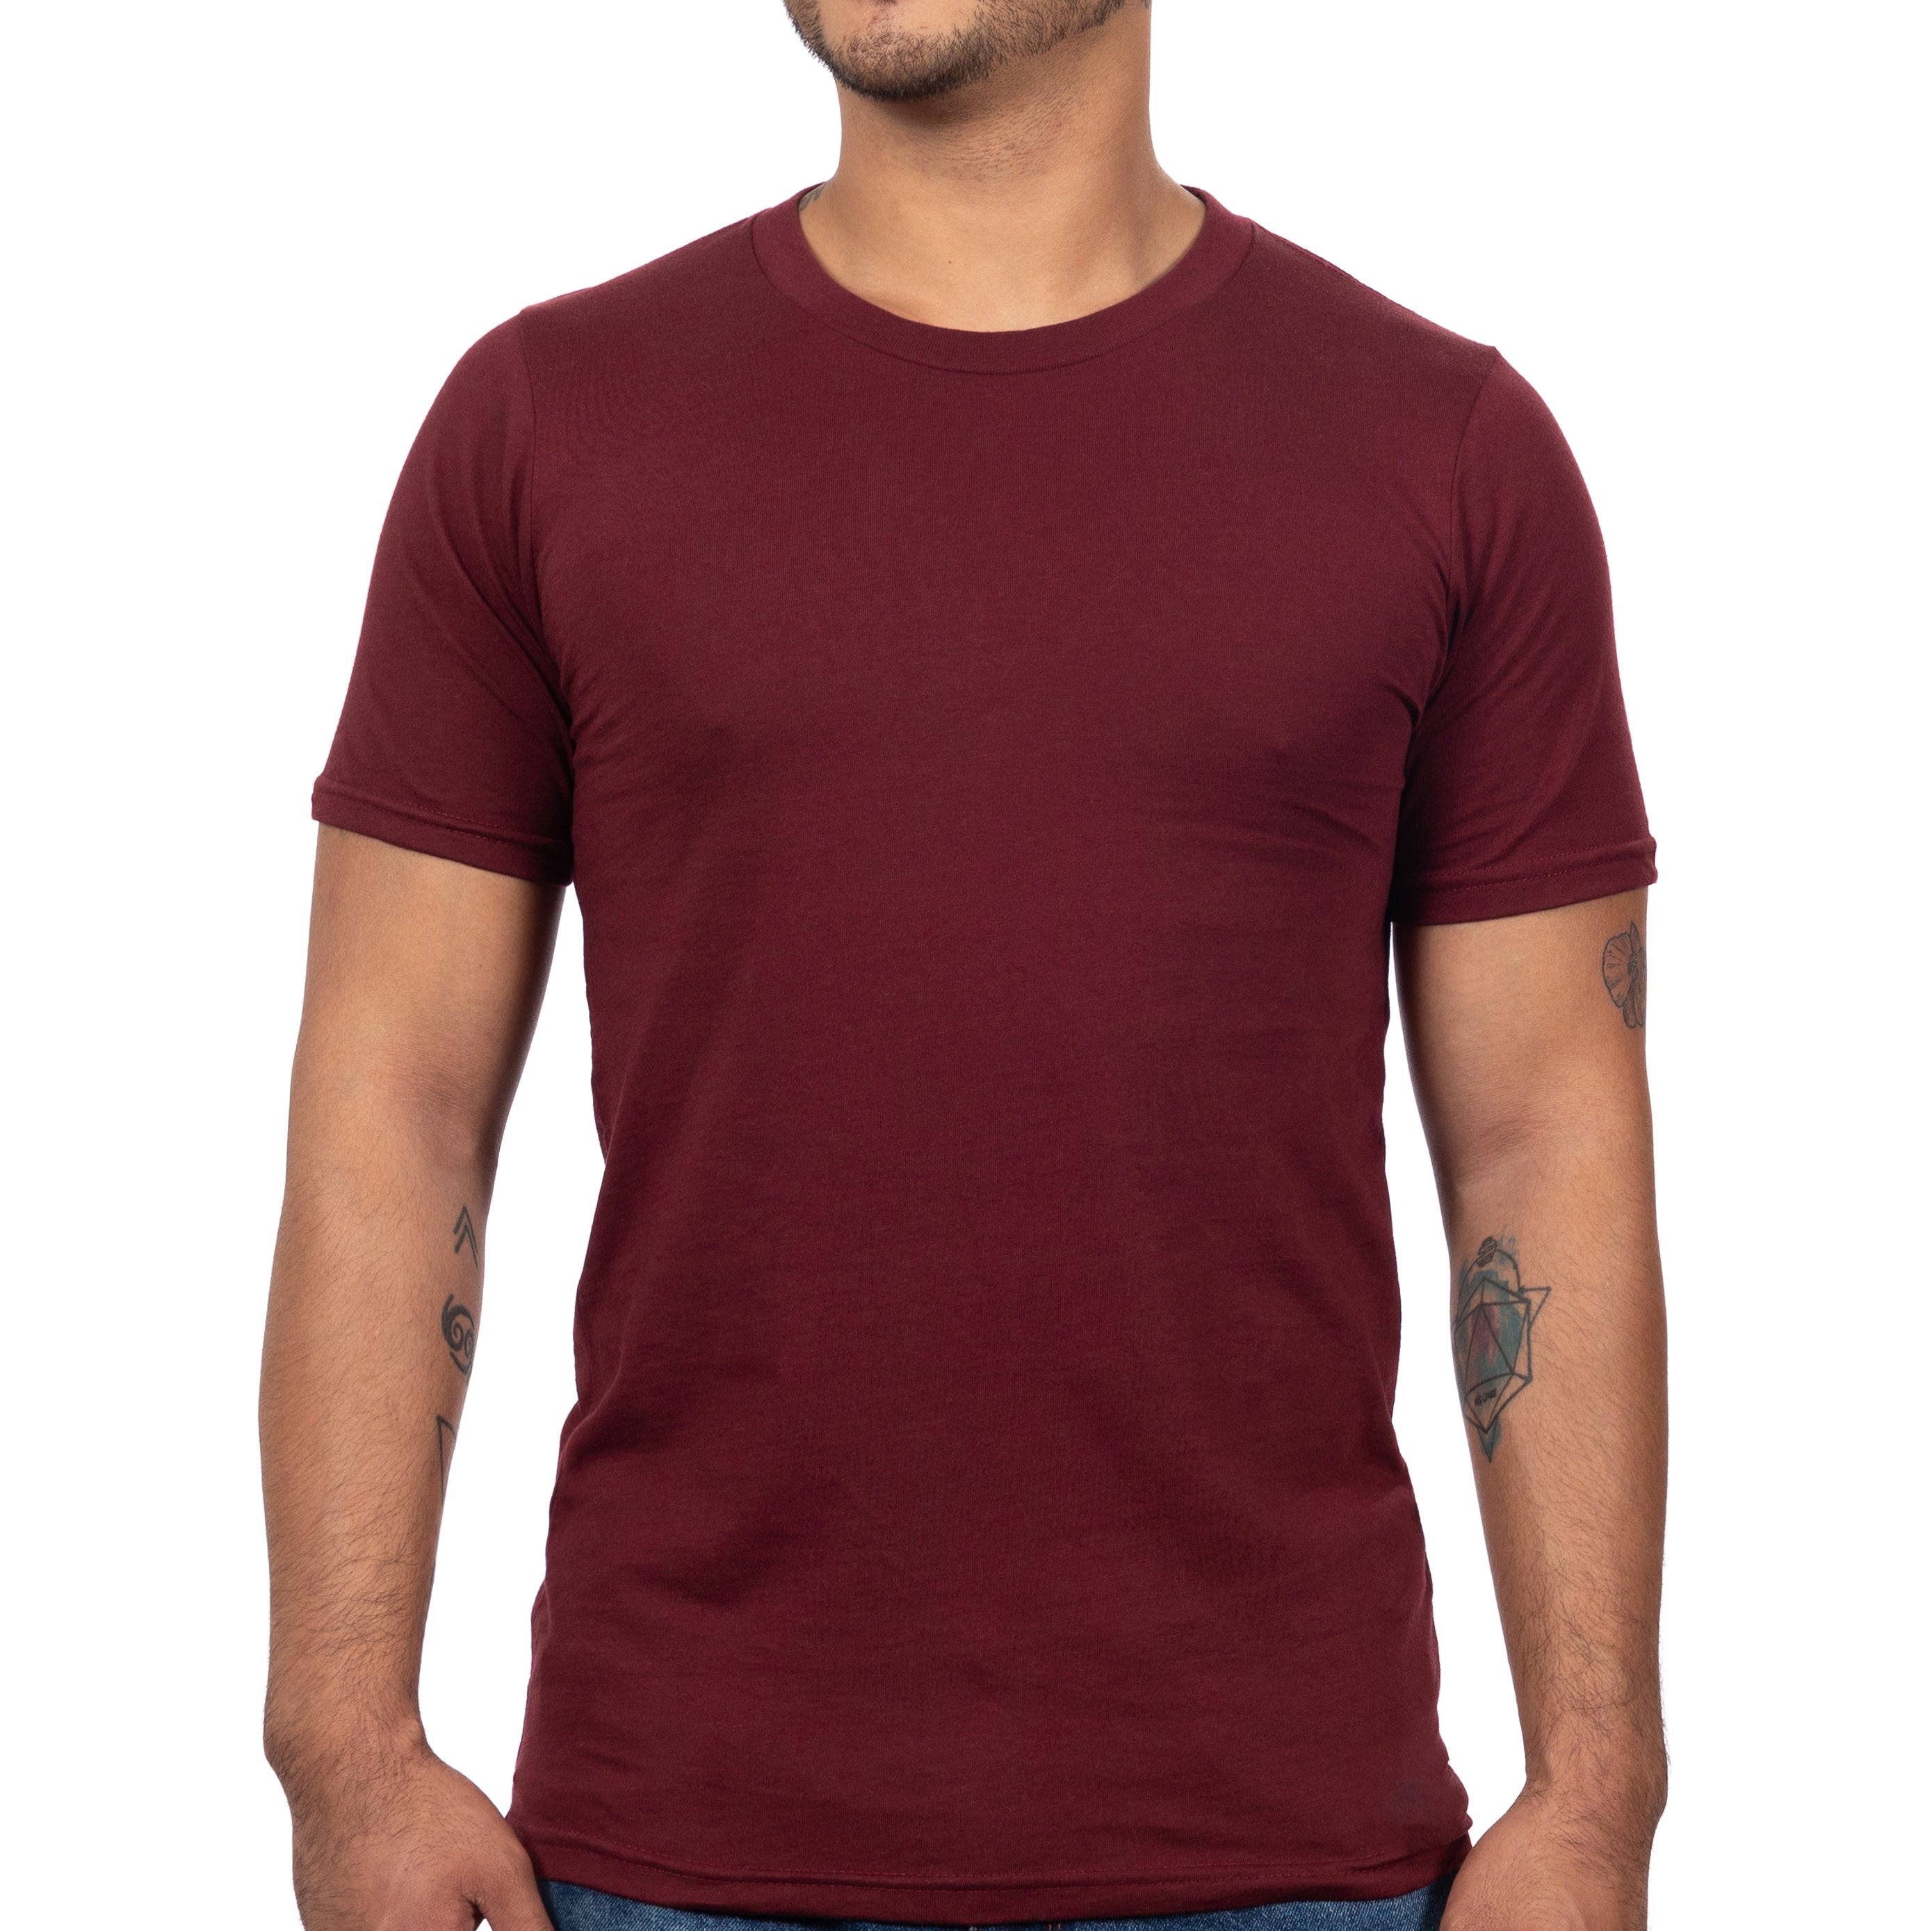 Burgundy Wine Cotton T-Shirt